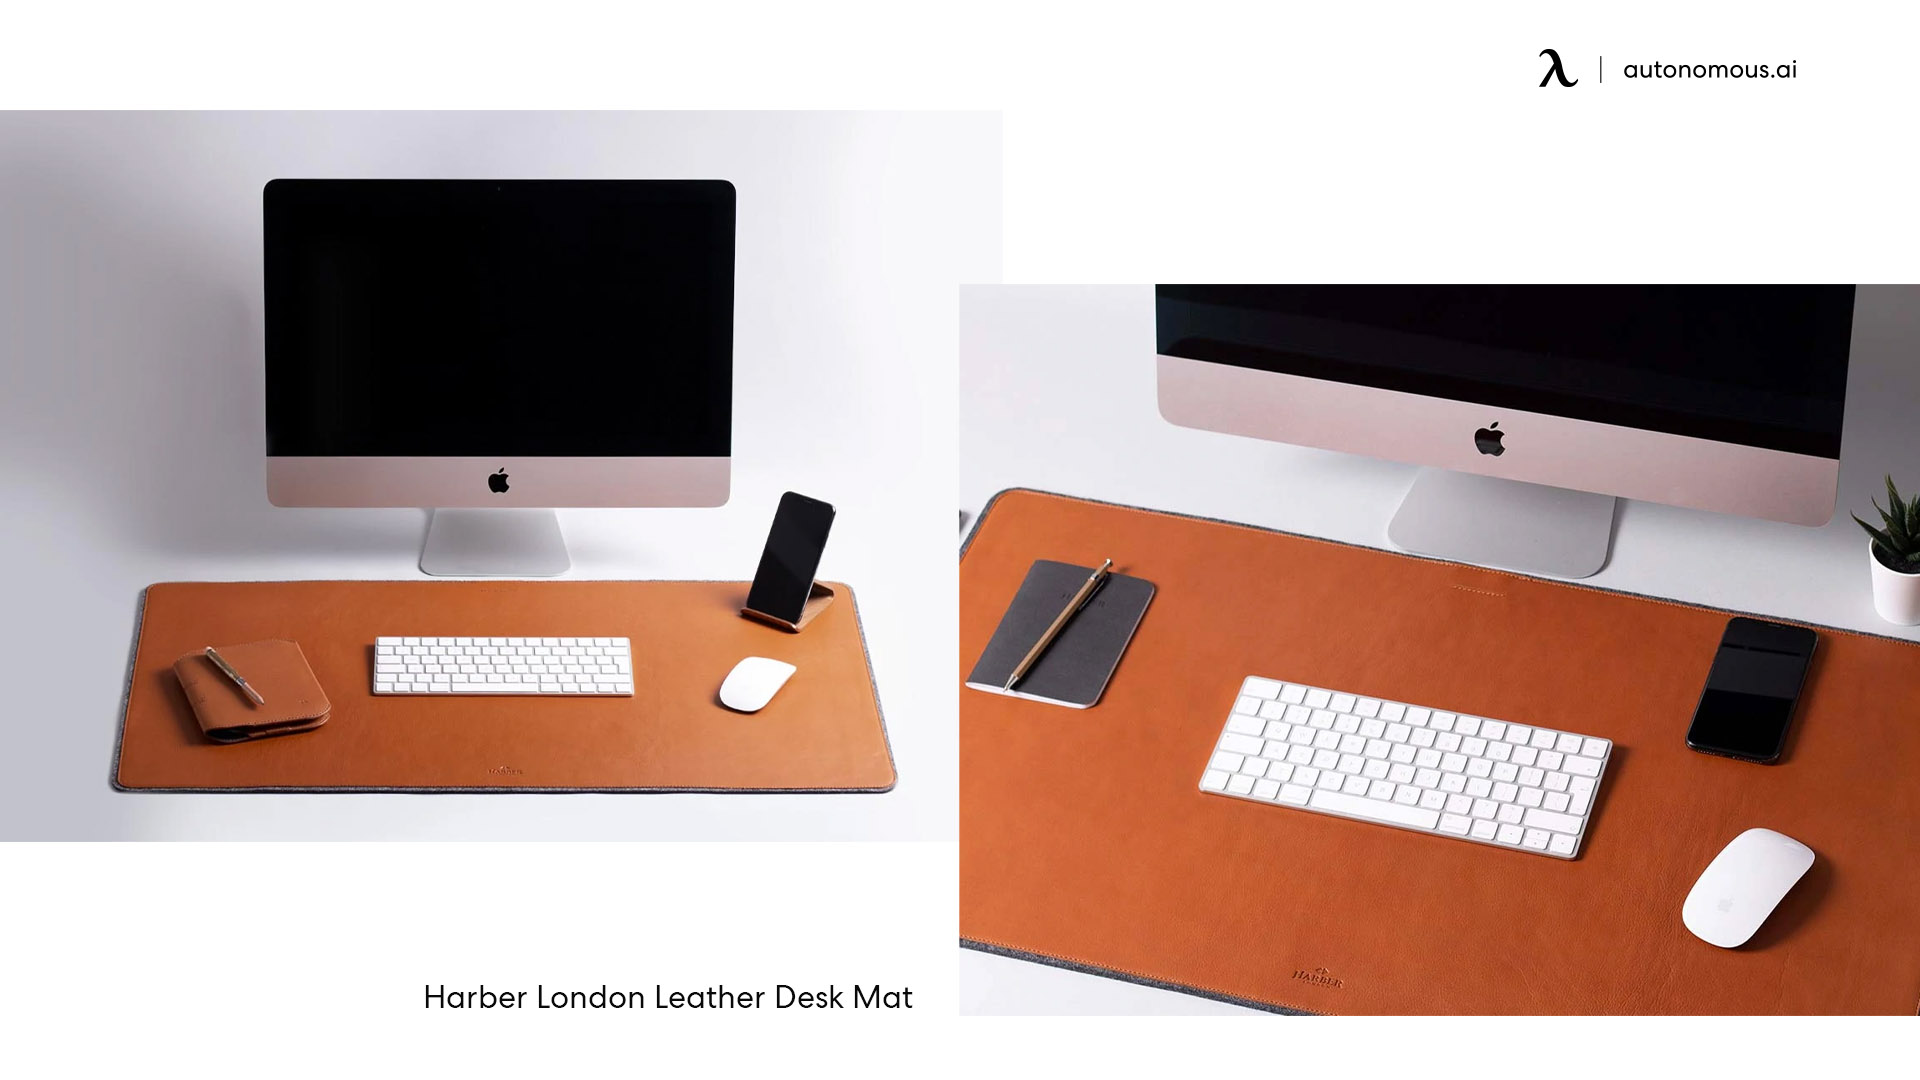 Harber London Leather Desk Mat